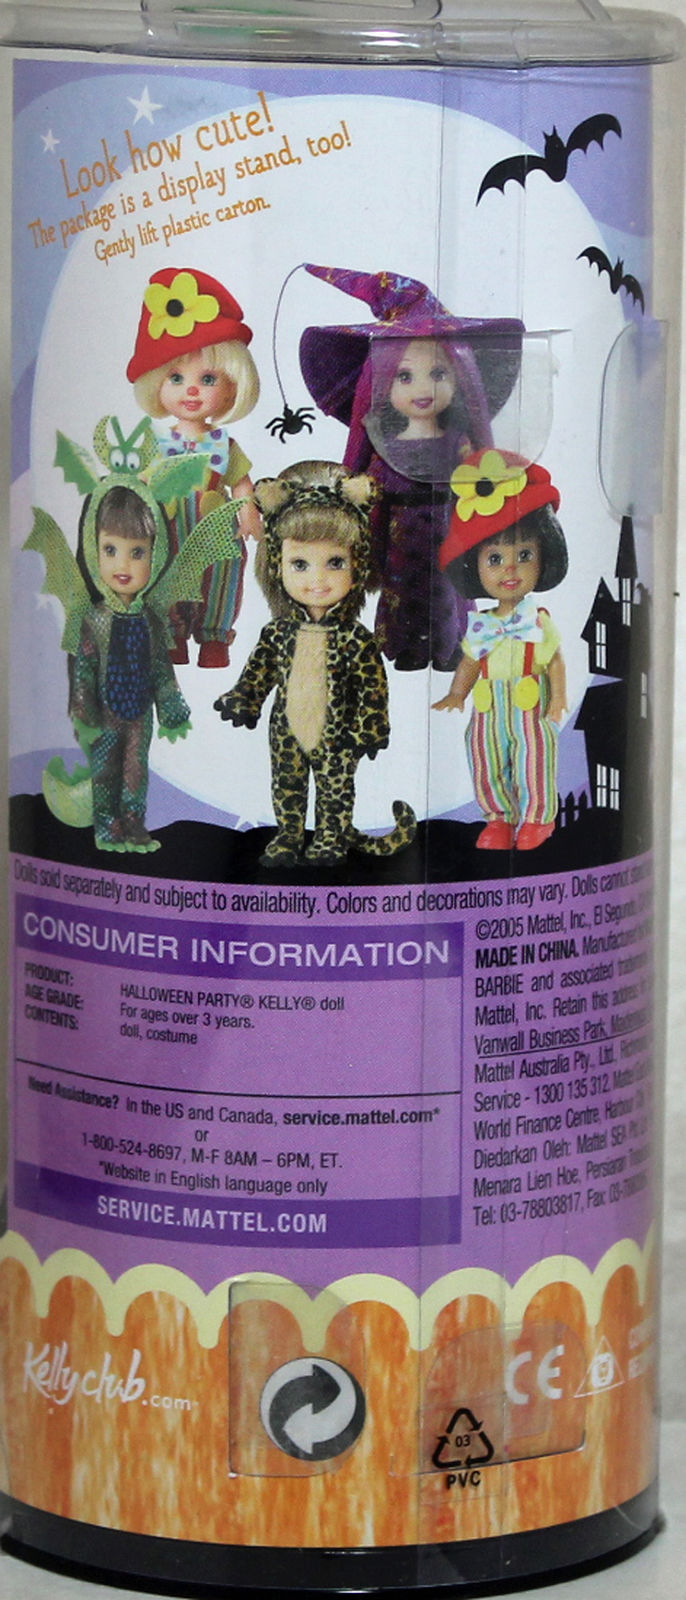 2005 Halloween Party Clown Kelly Barbie (H6740)